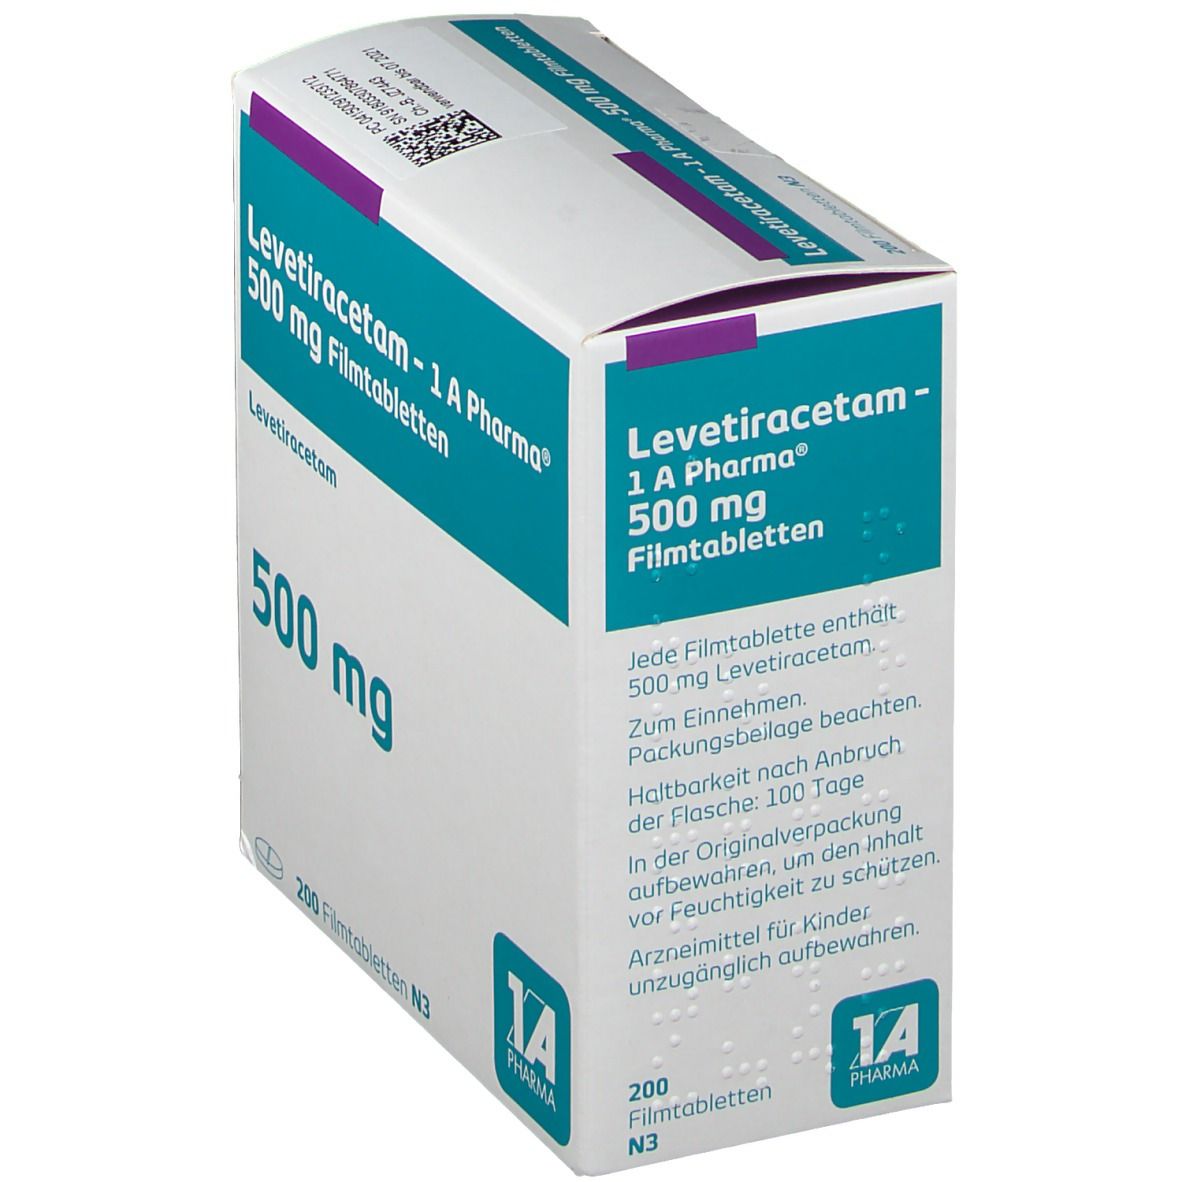 Levetiracetam 1A Pharma®500